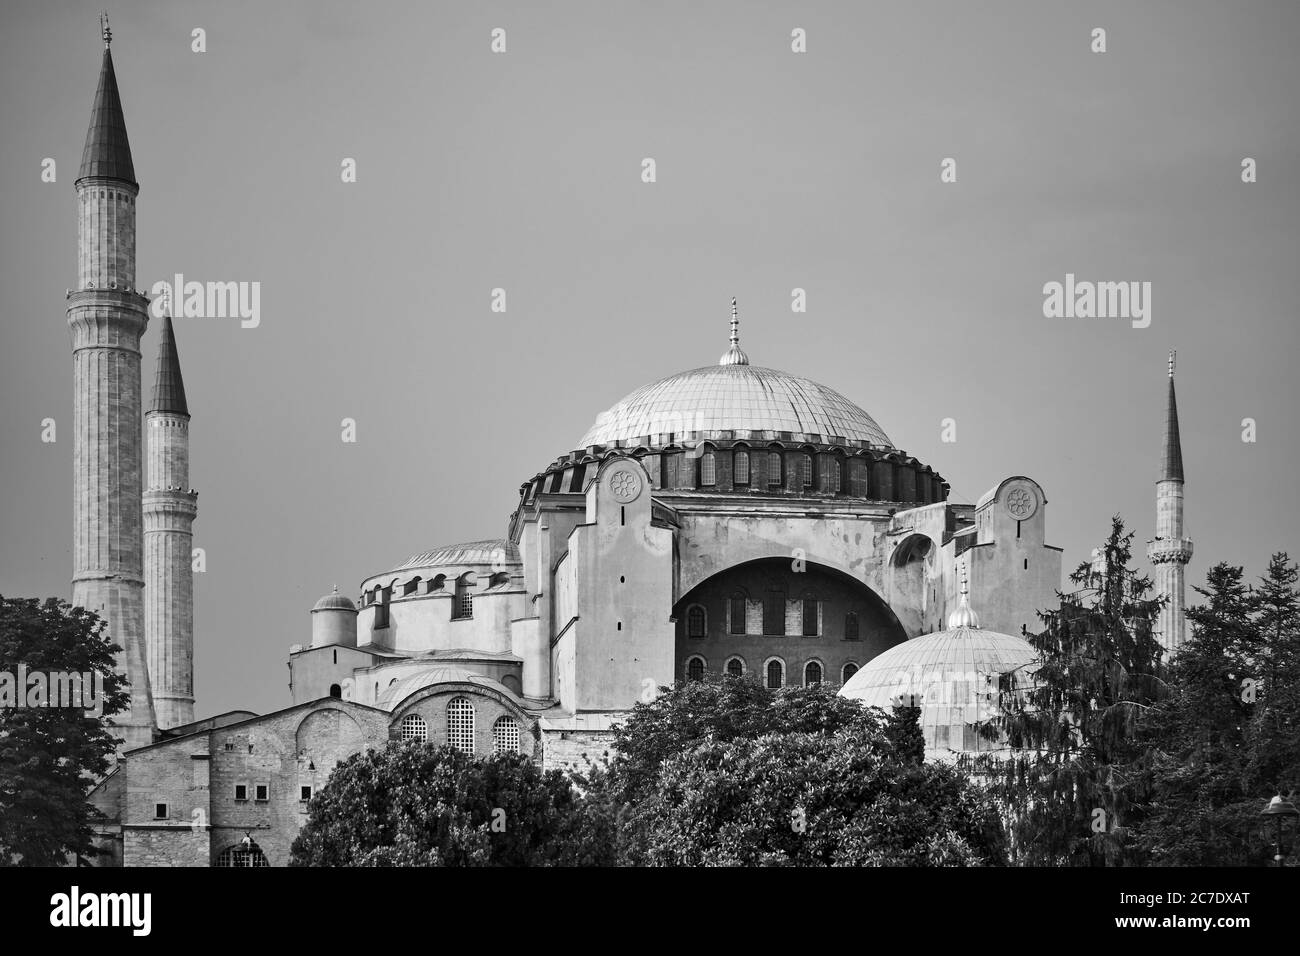 Die Hagia Sophia Moschee in Istanbul, Türkei. Schwarzweiß-Fotografie Stockfoto